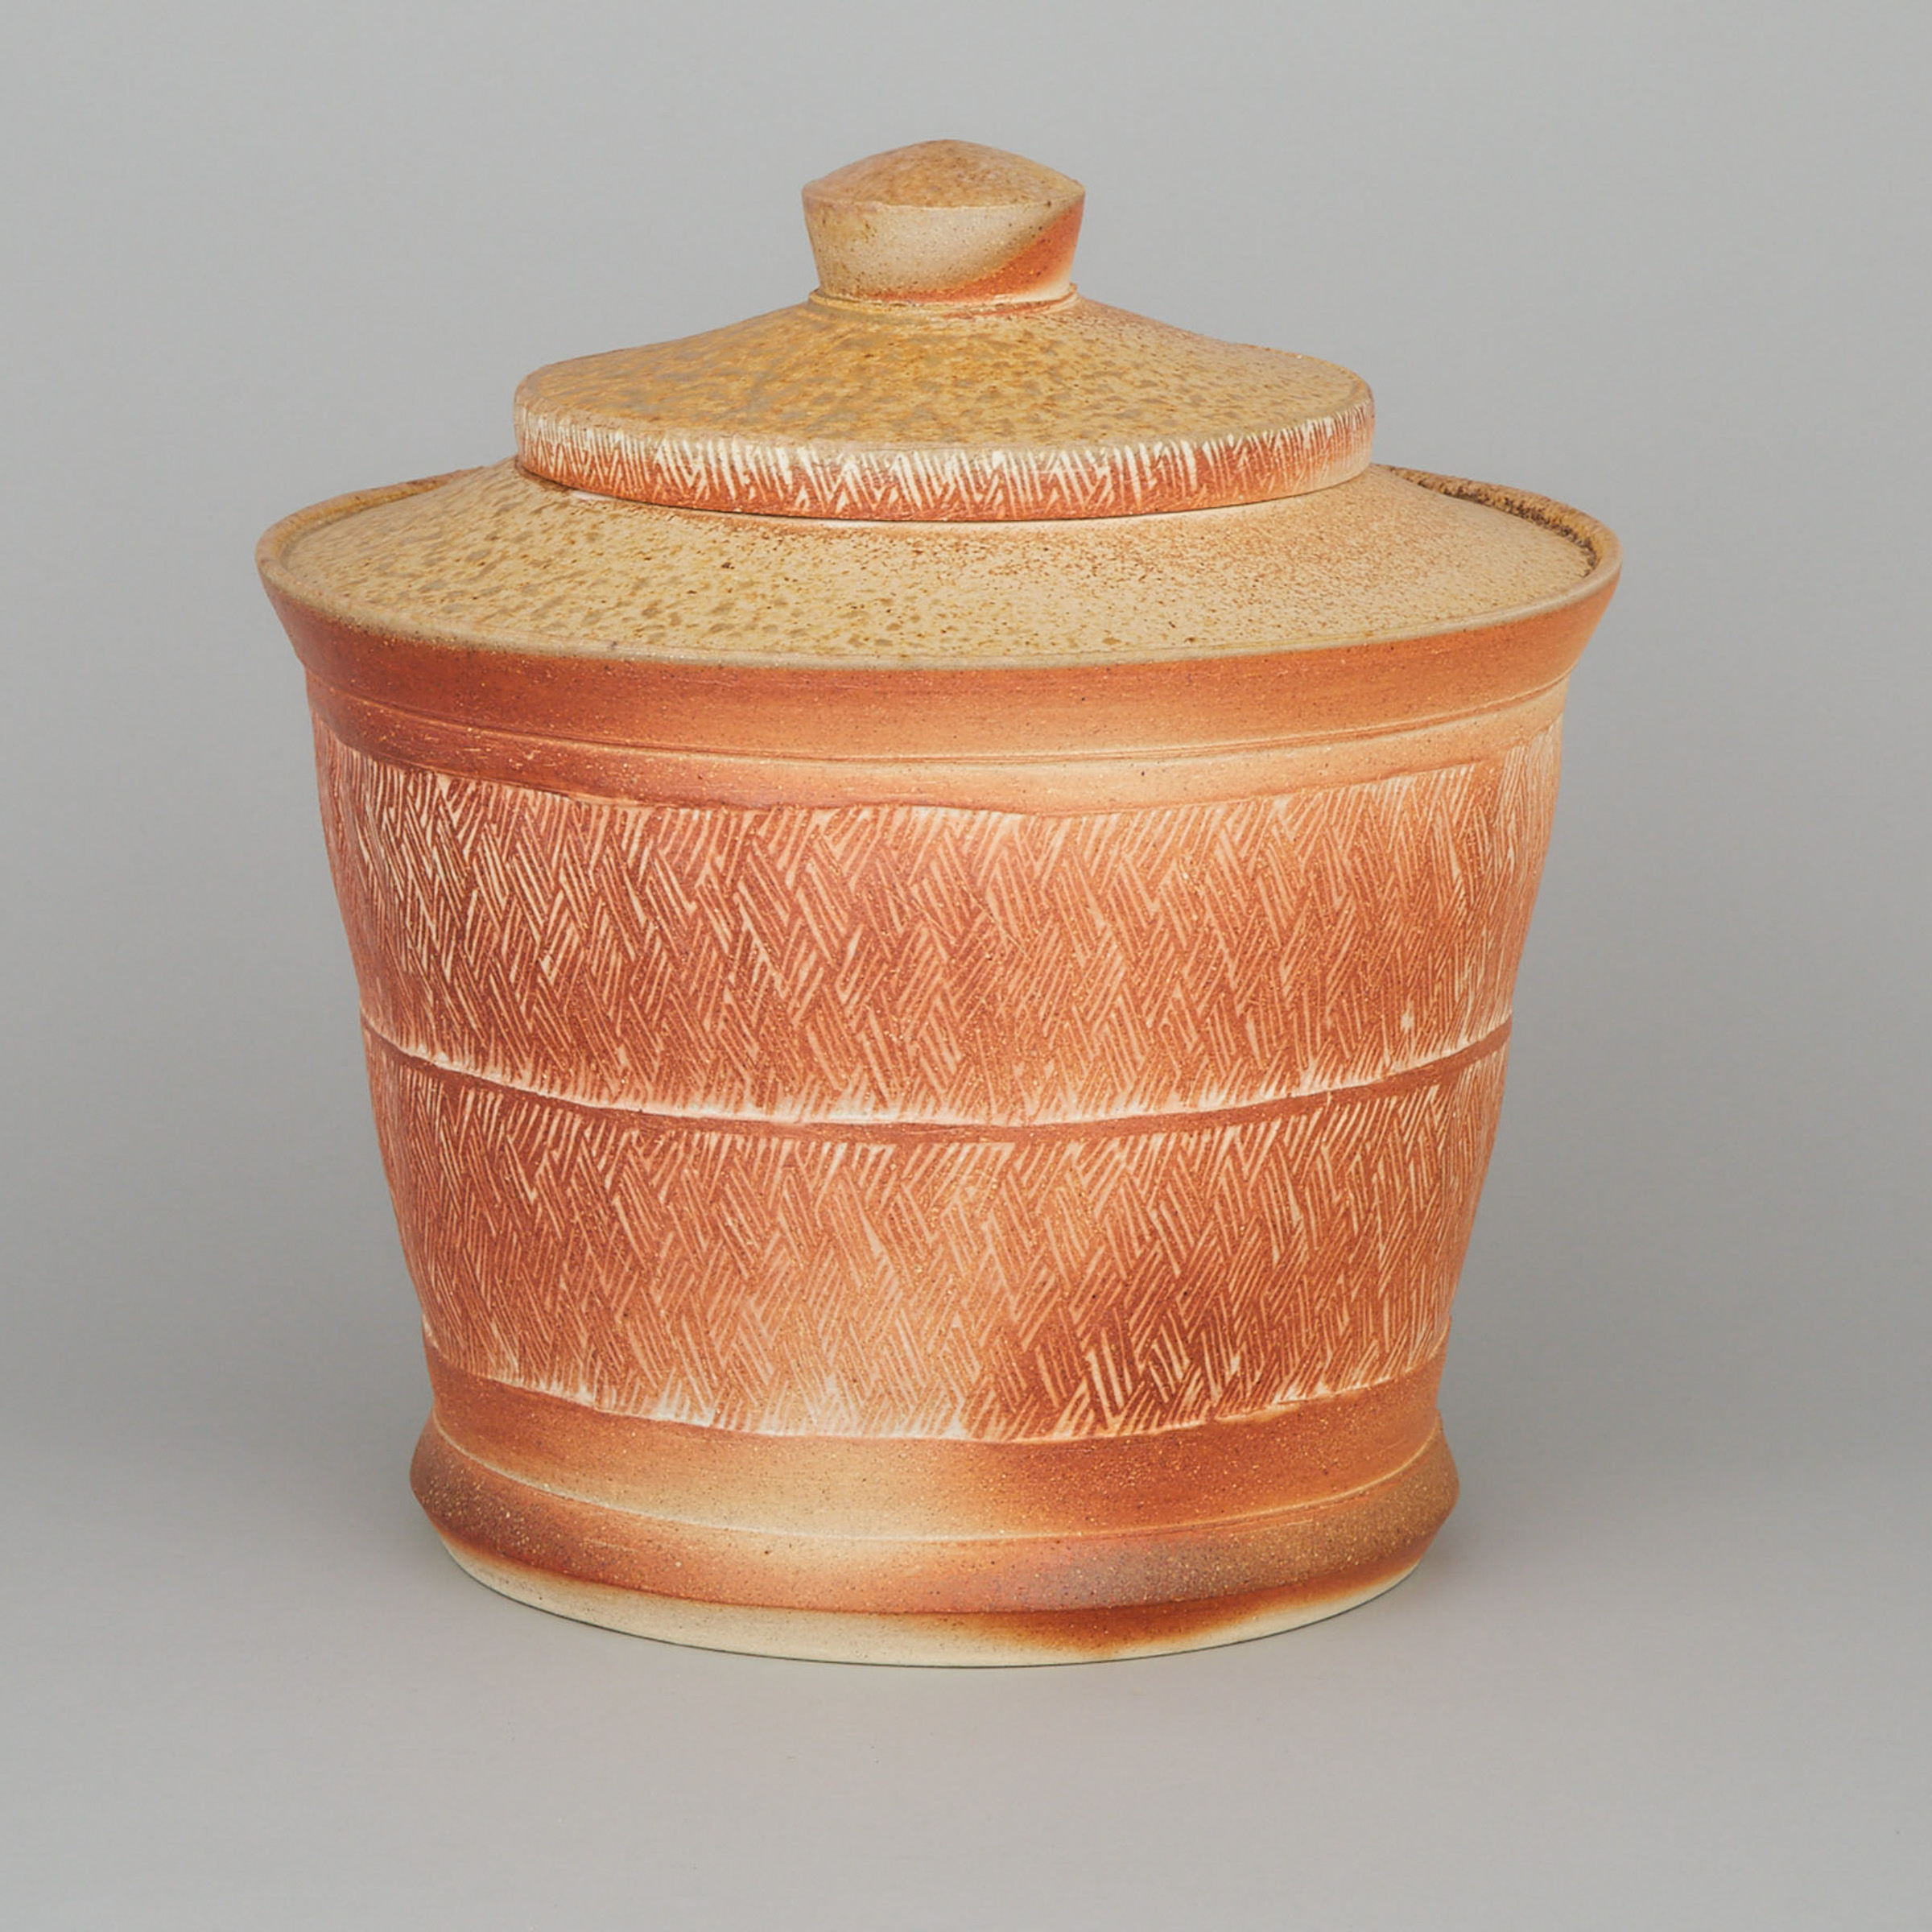 Bruce Cochrane (Canadian, b.1953), Stoneware Covered Jar, c.2012